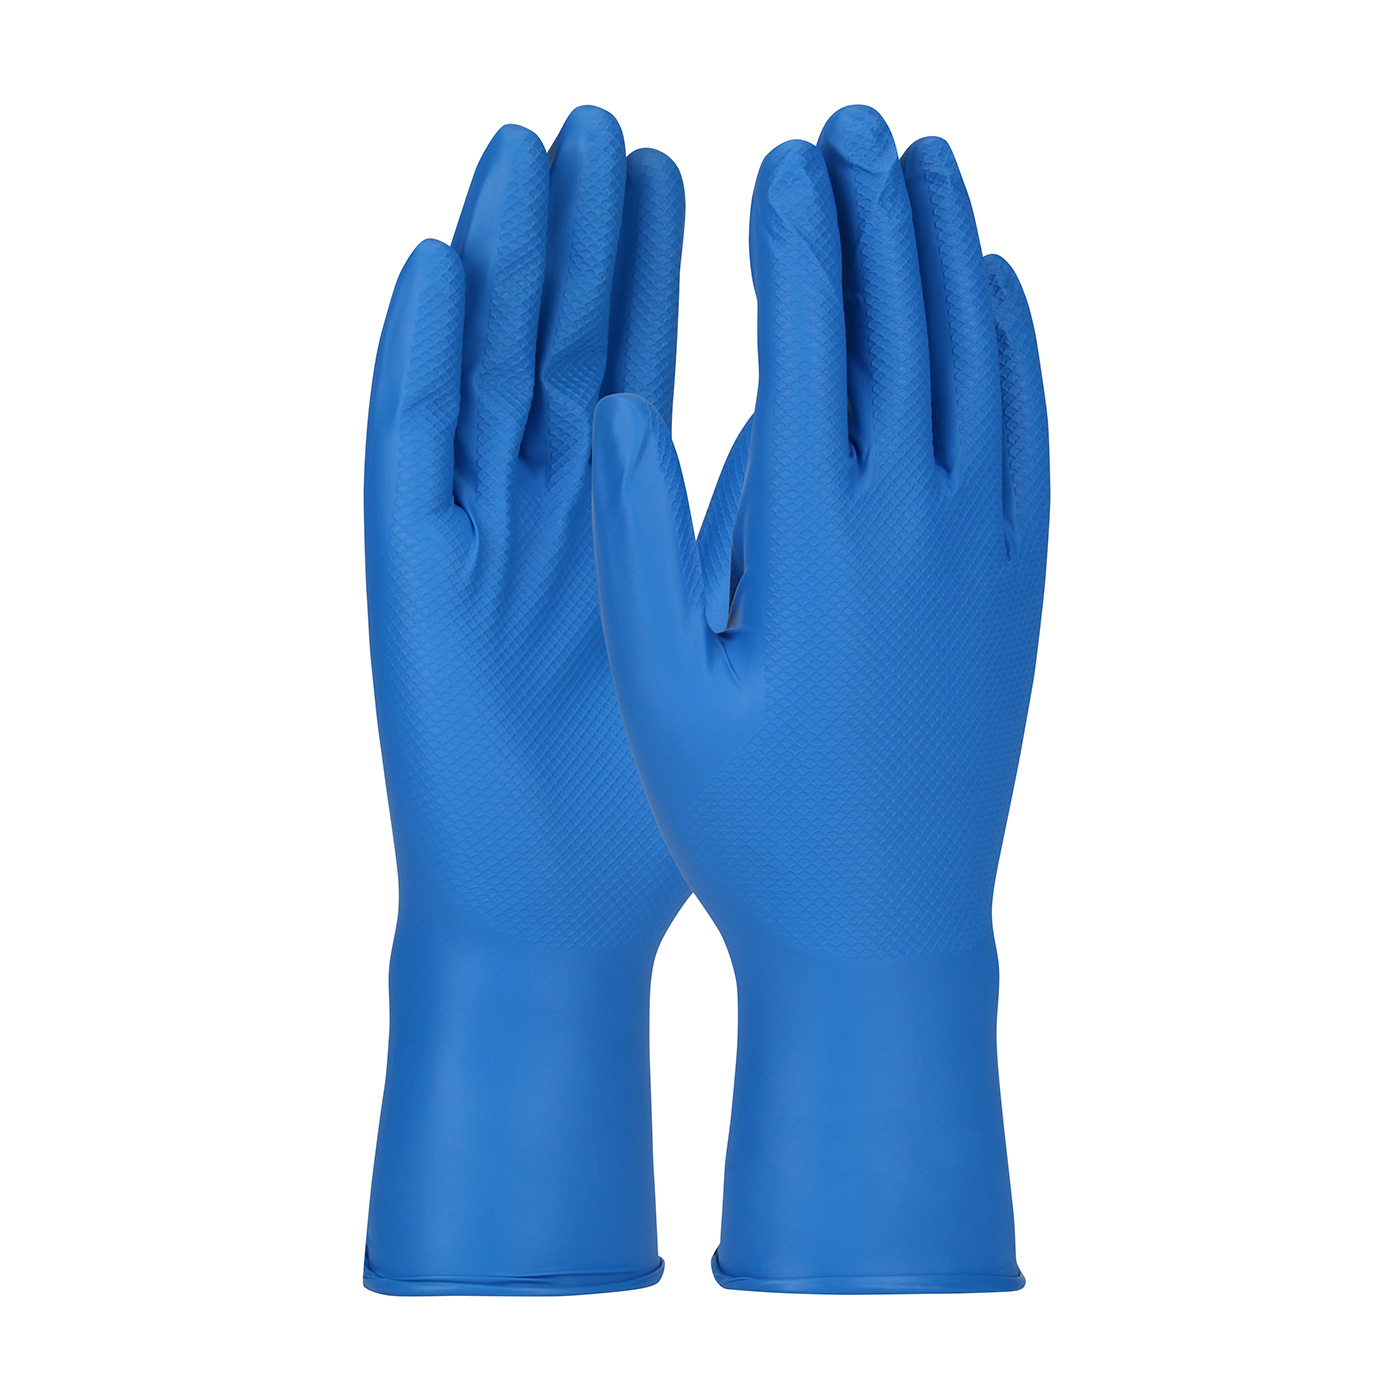 GRIPPAZ FOOD PLUS BLUE 8 MIL FISH SCALE - Disposable Gloves